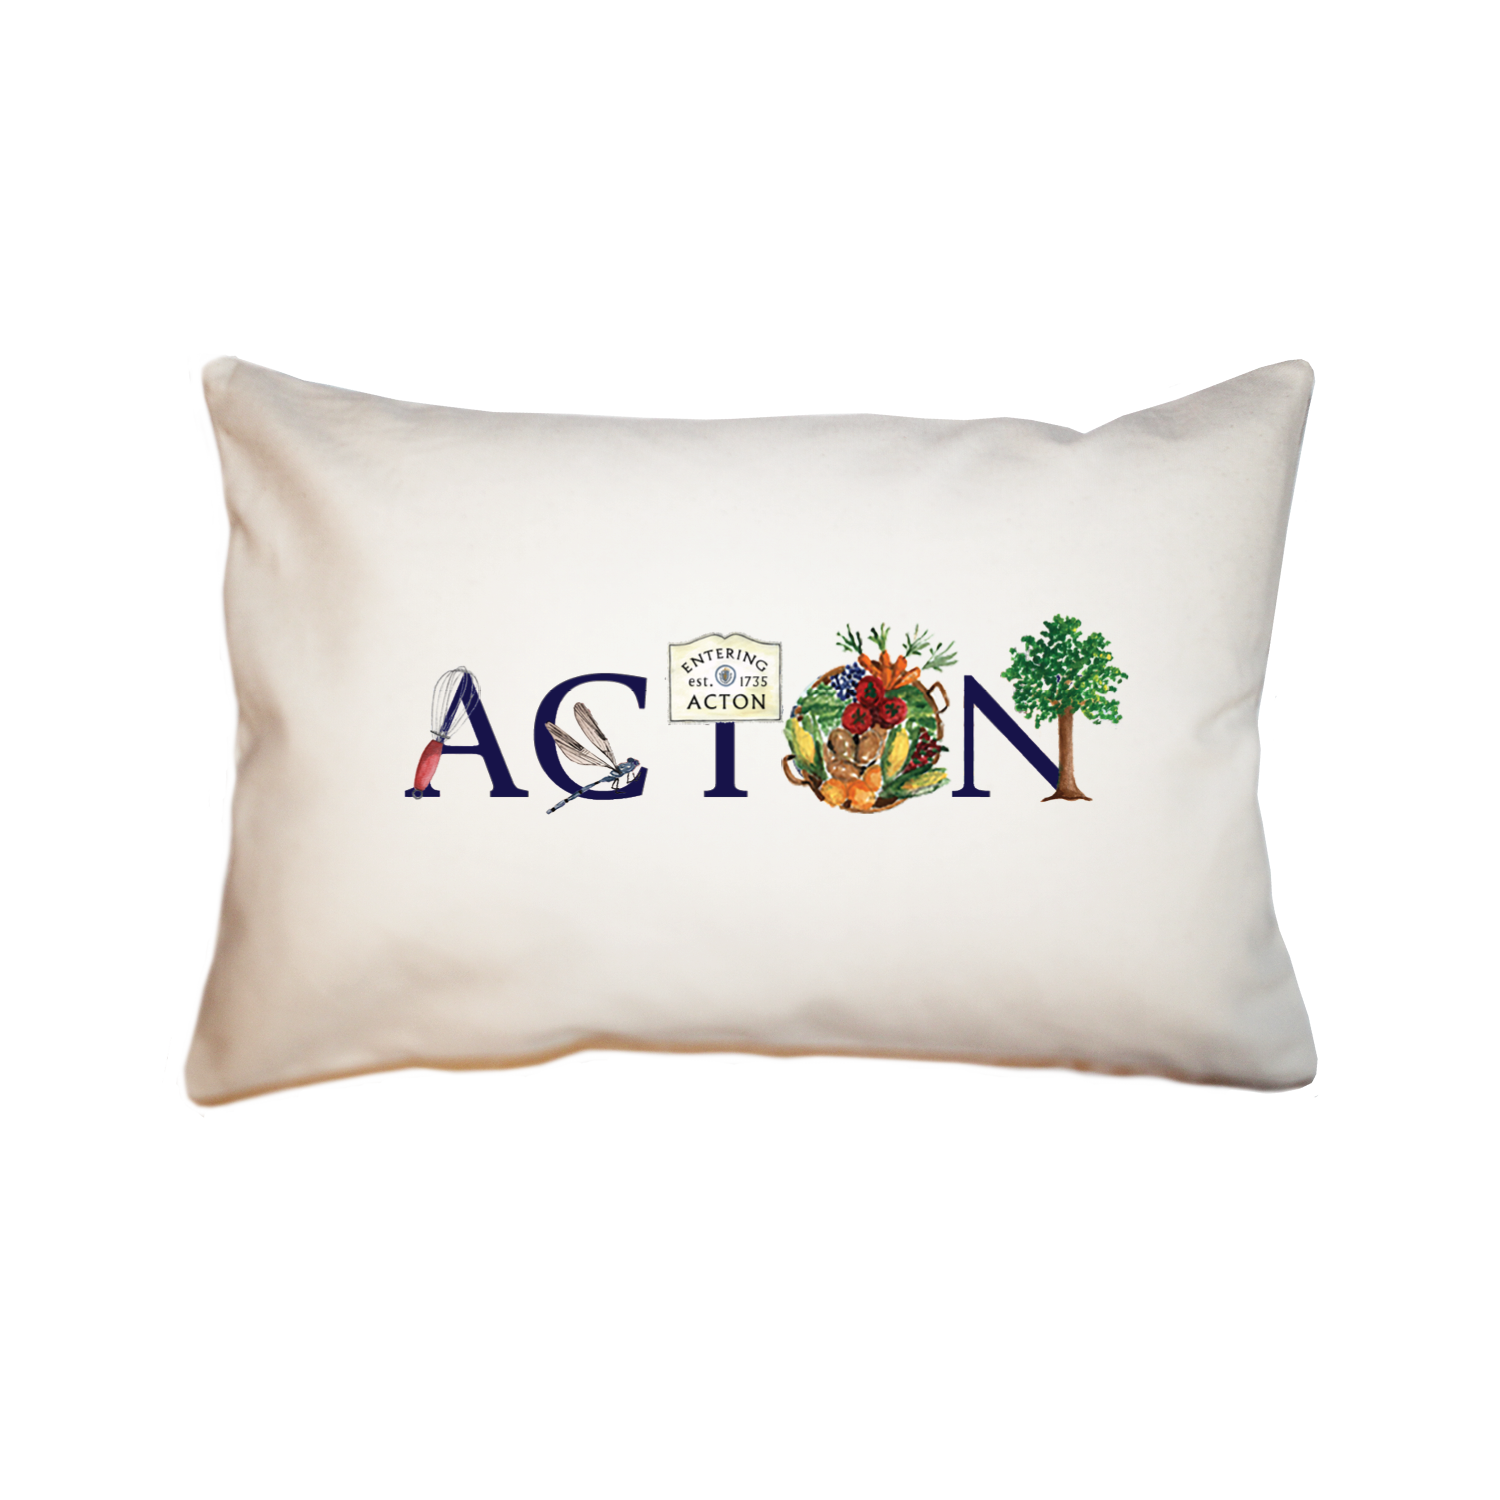 acton large rectangle pillow